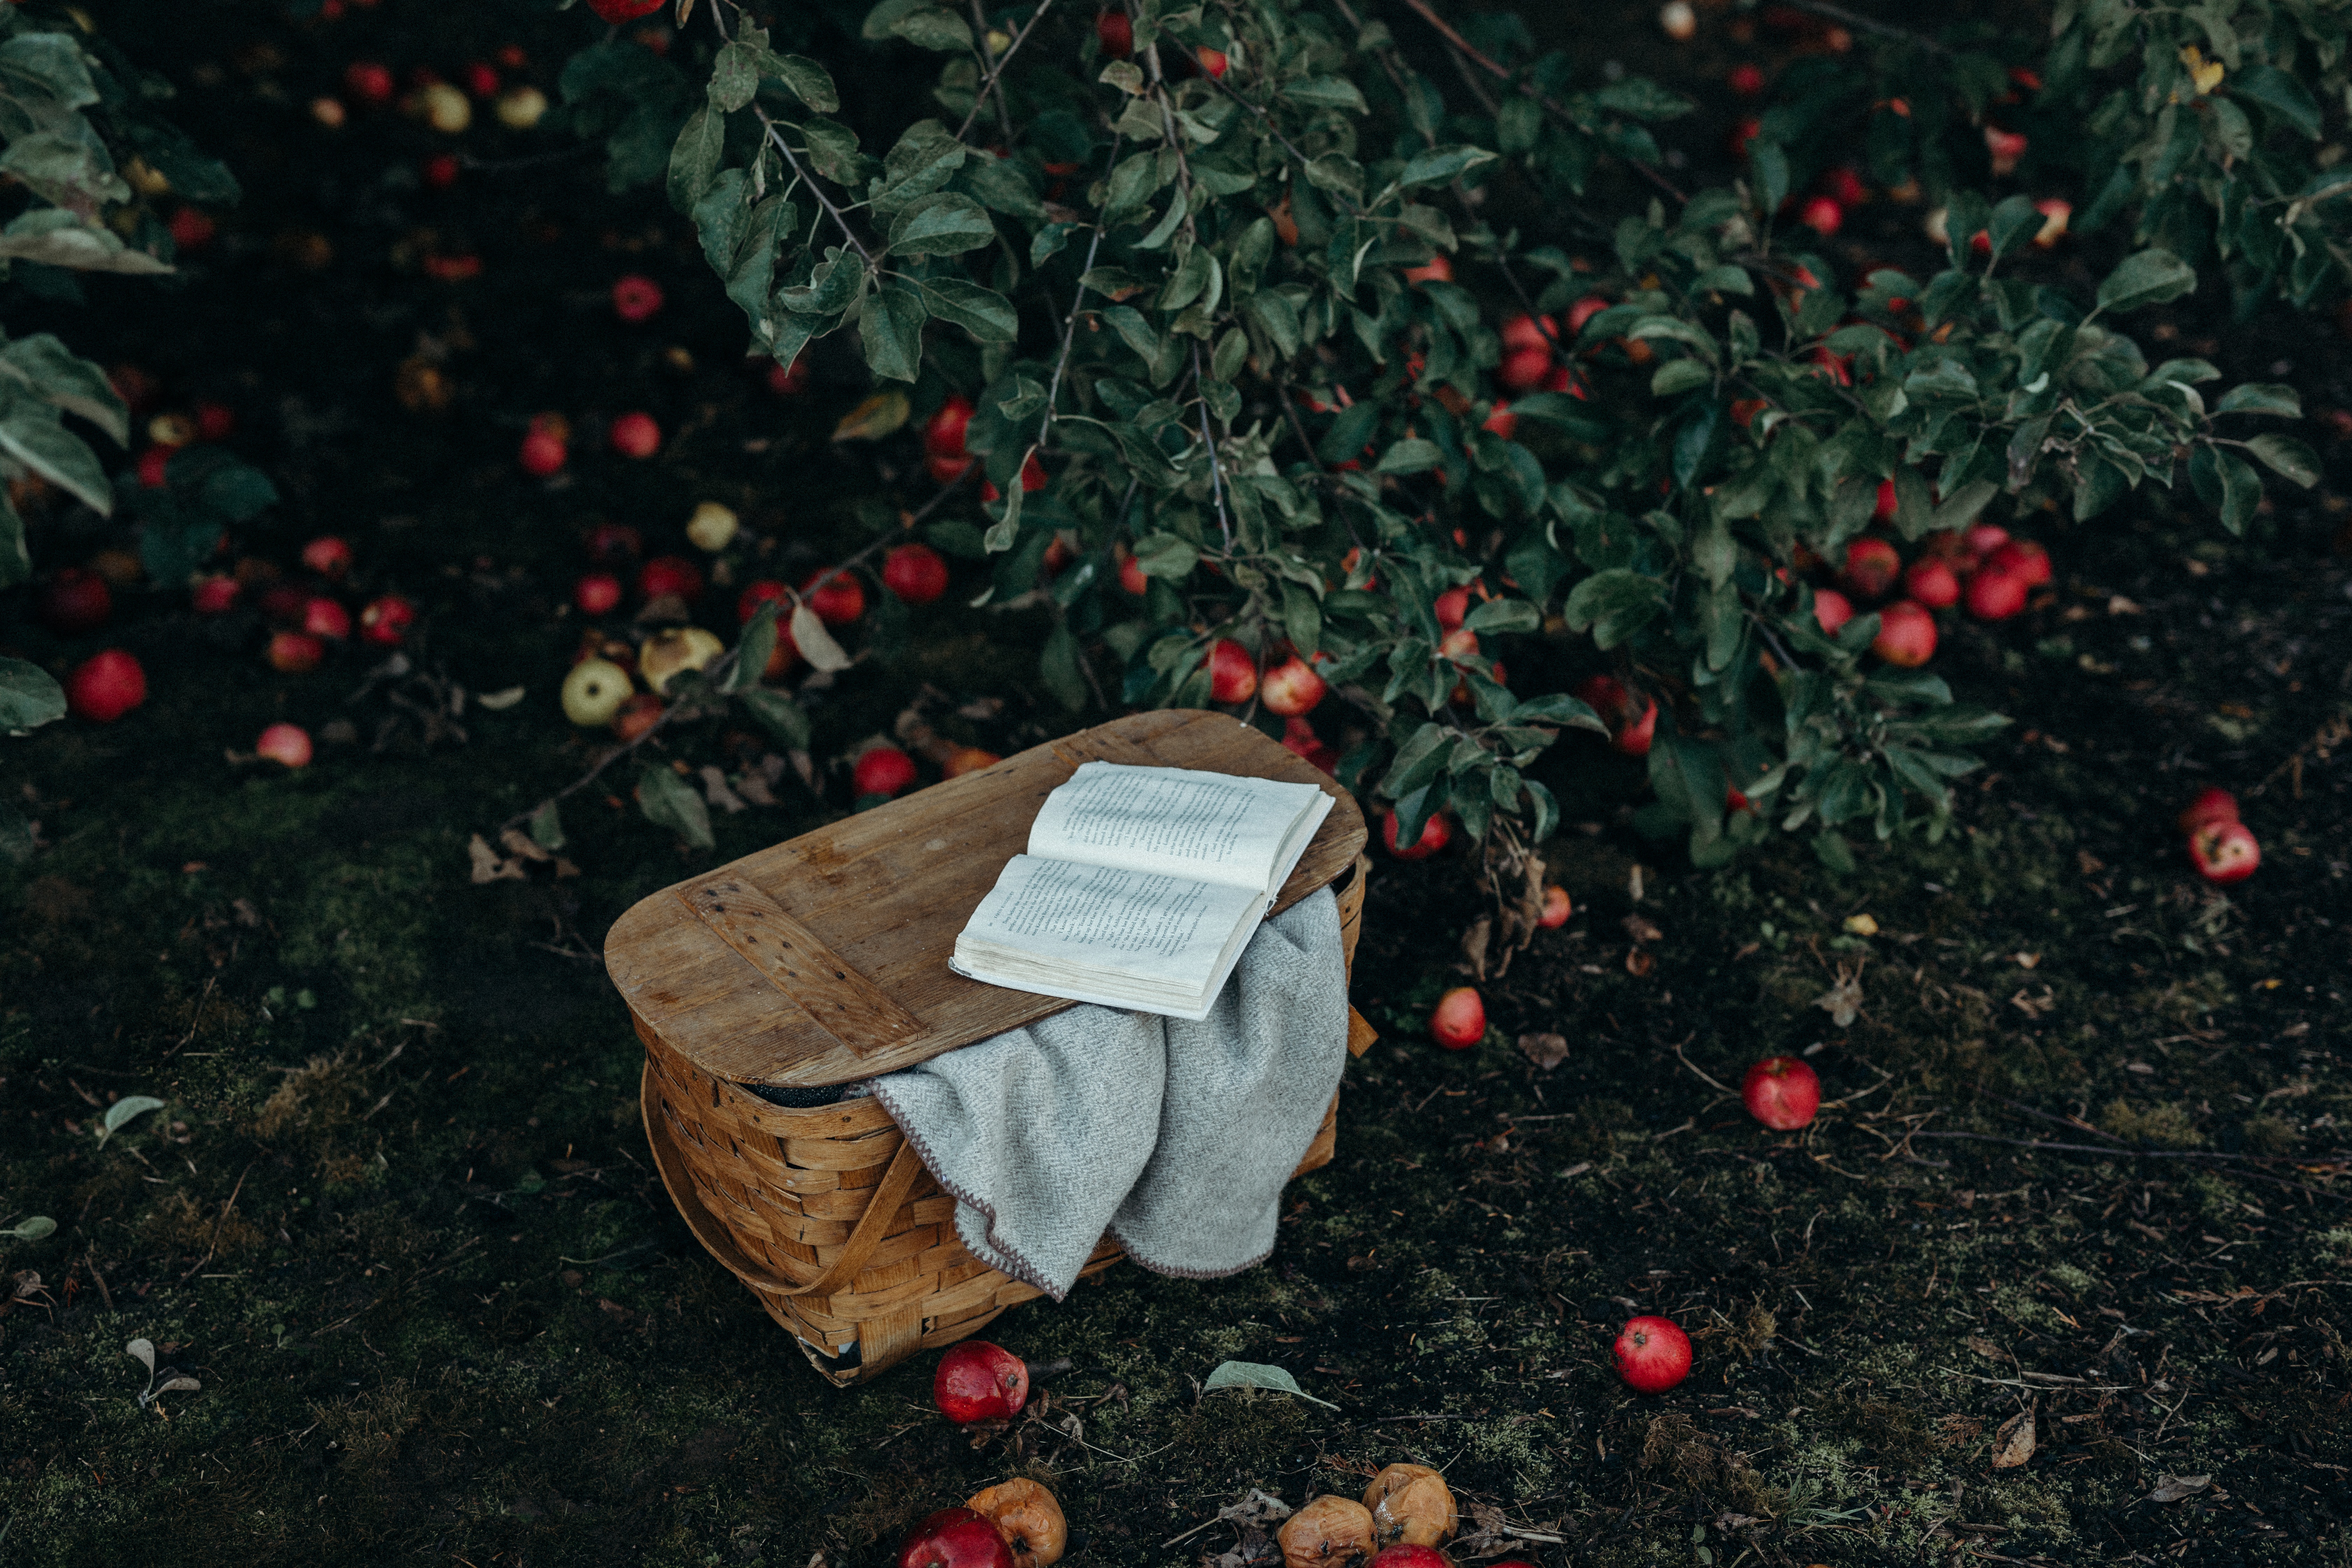 apples, miscellanea, miscellaneous, book, basket, harvest